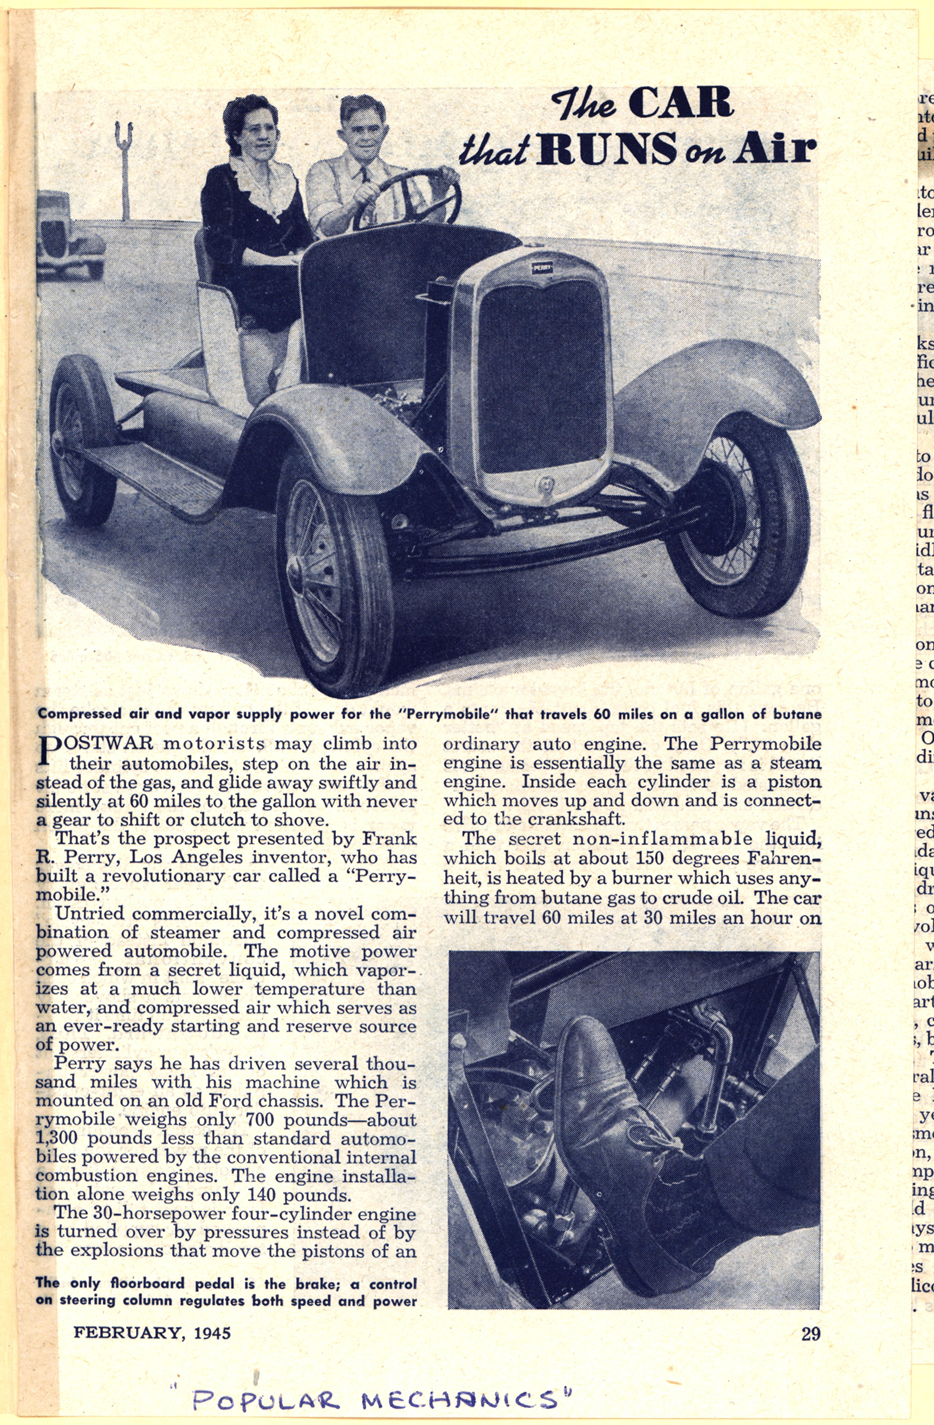 Perrymobile Popular Mechanics Article, February 1945